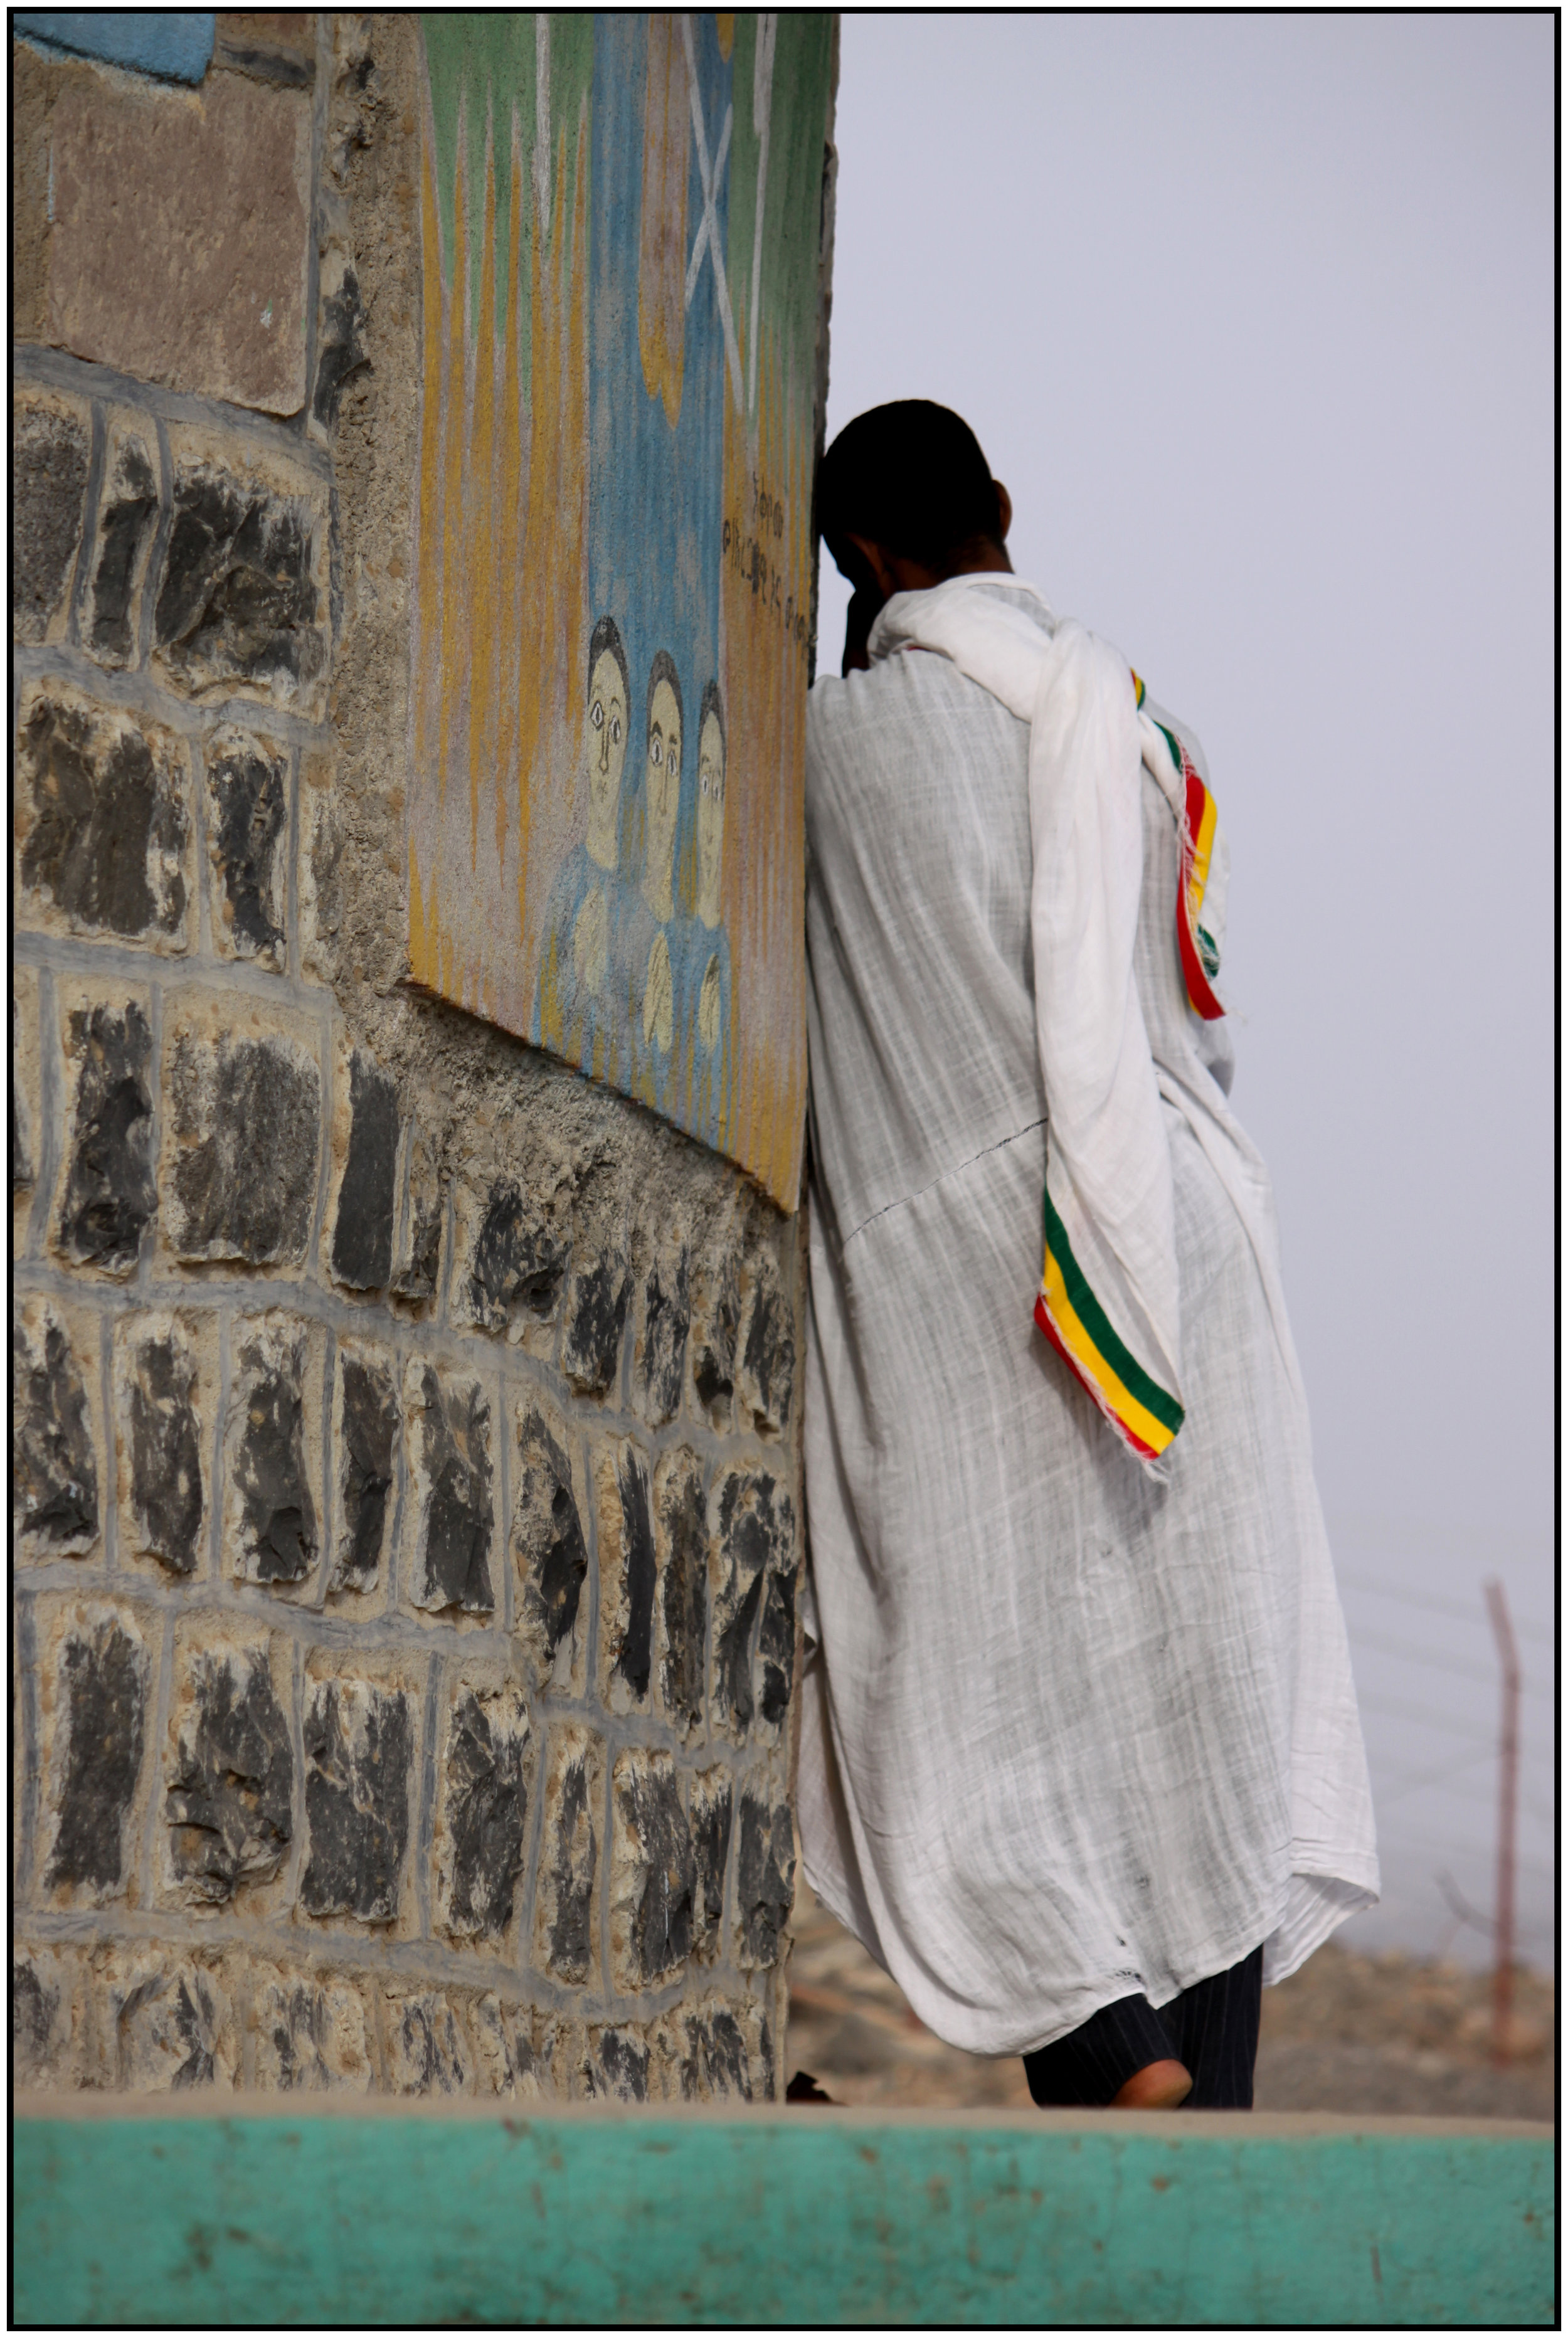 Ethiopia March 2012 414aw.jpg